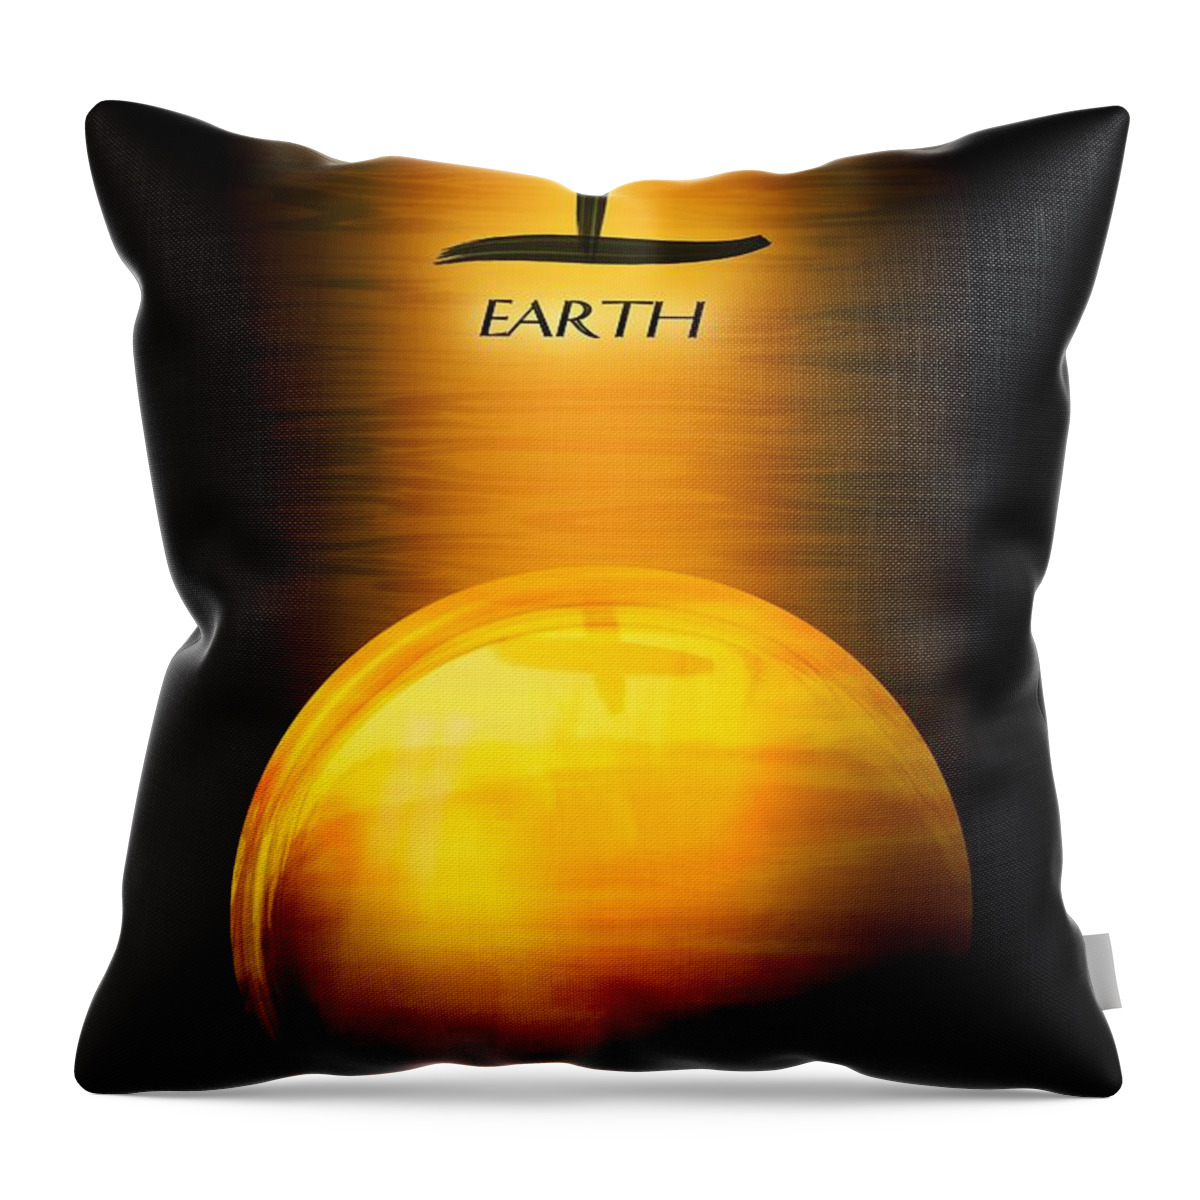 John Wills Art Throw Pillow featuring the digital art Earth Elemental Sphere by John Wills